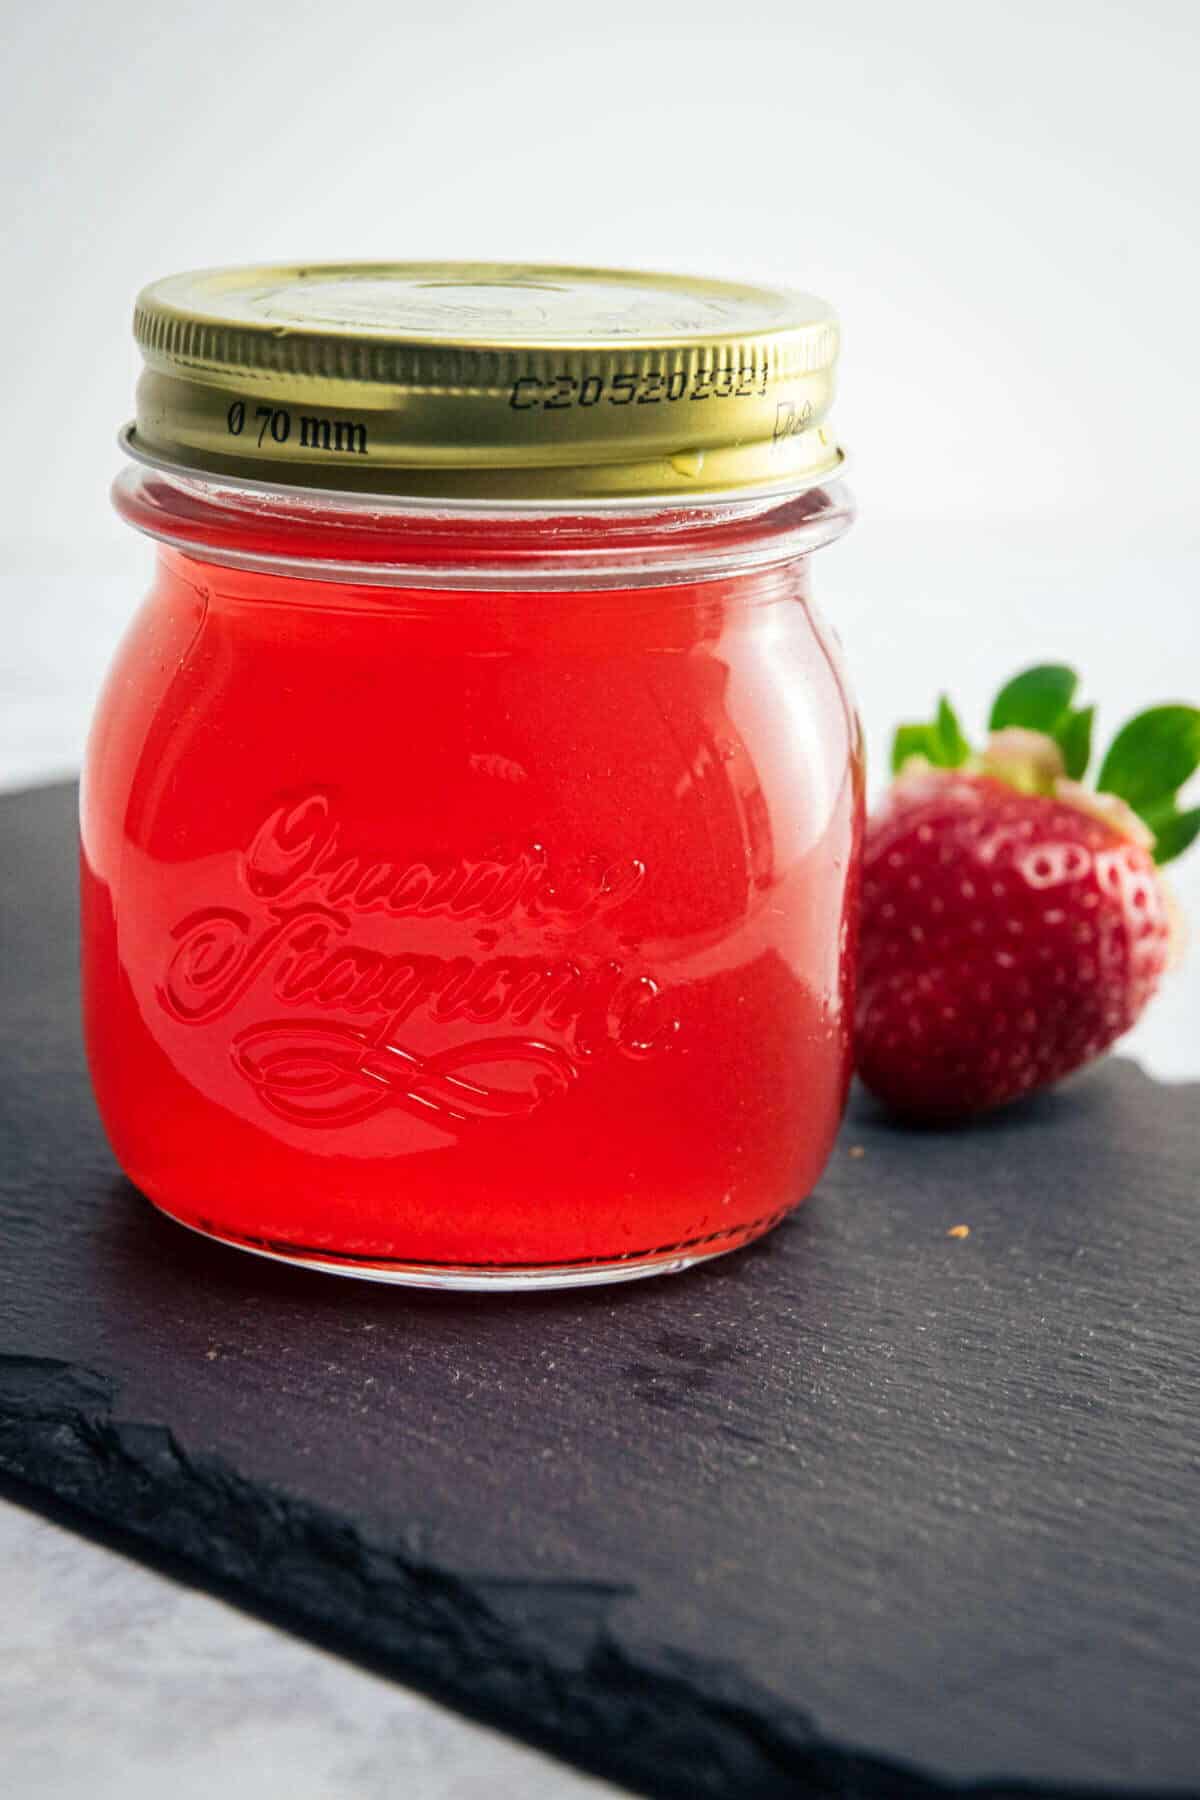 Strawberry liqueur in a jar, fresh strawberry on the side.